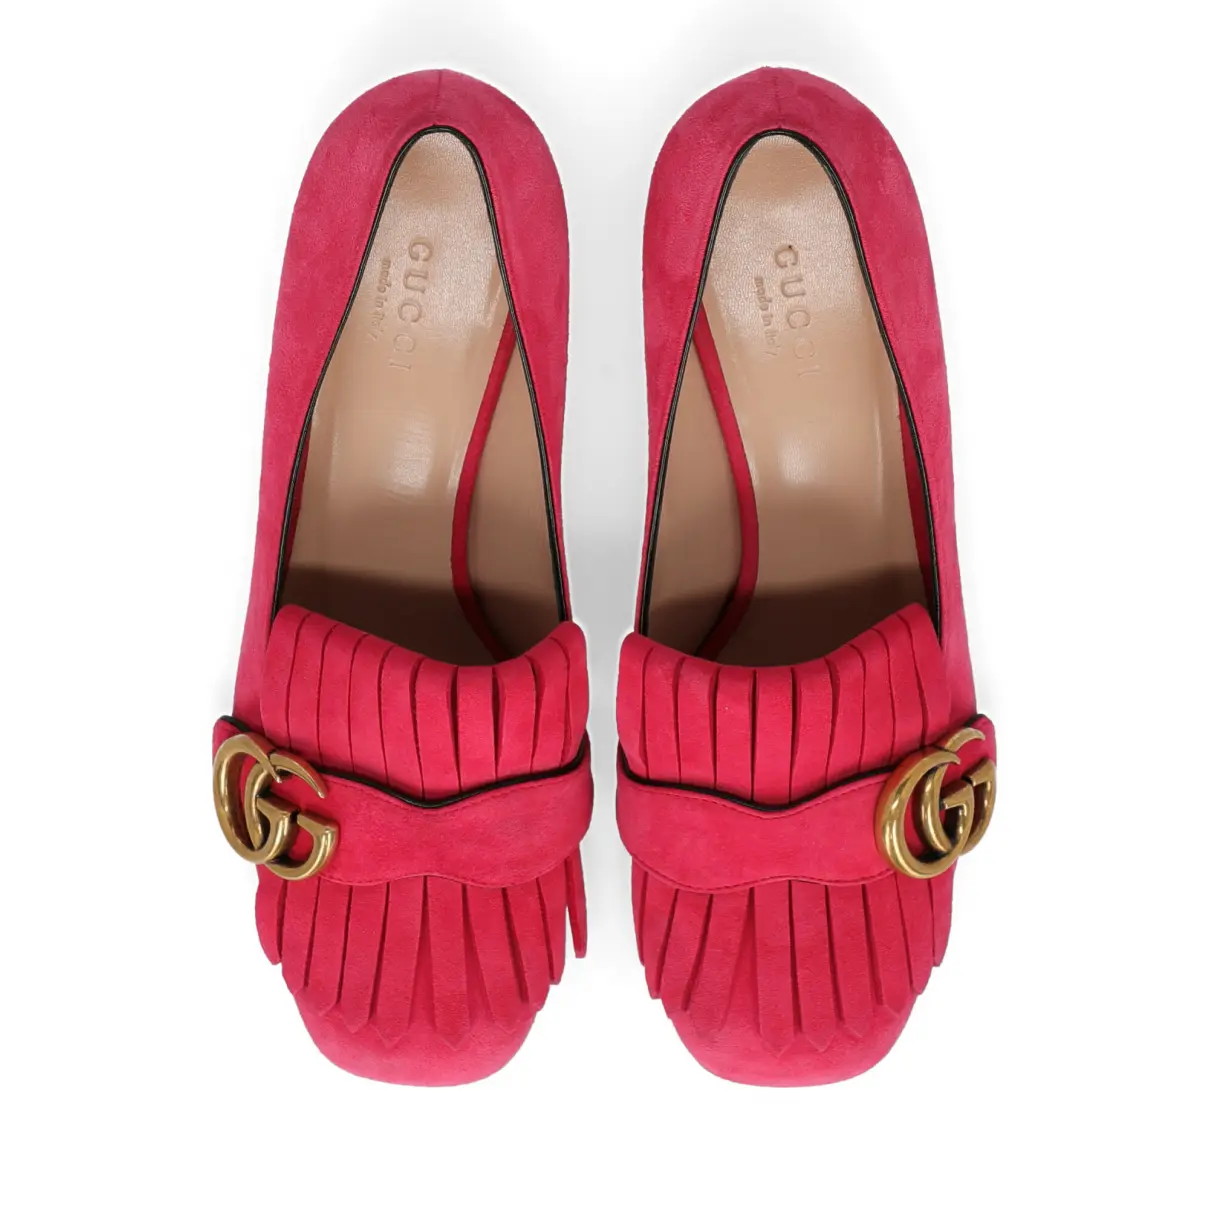 Marmont heels Gucci